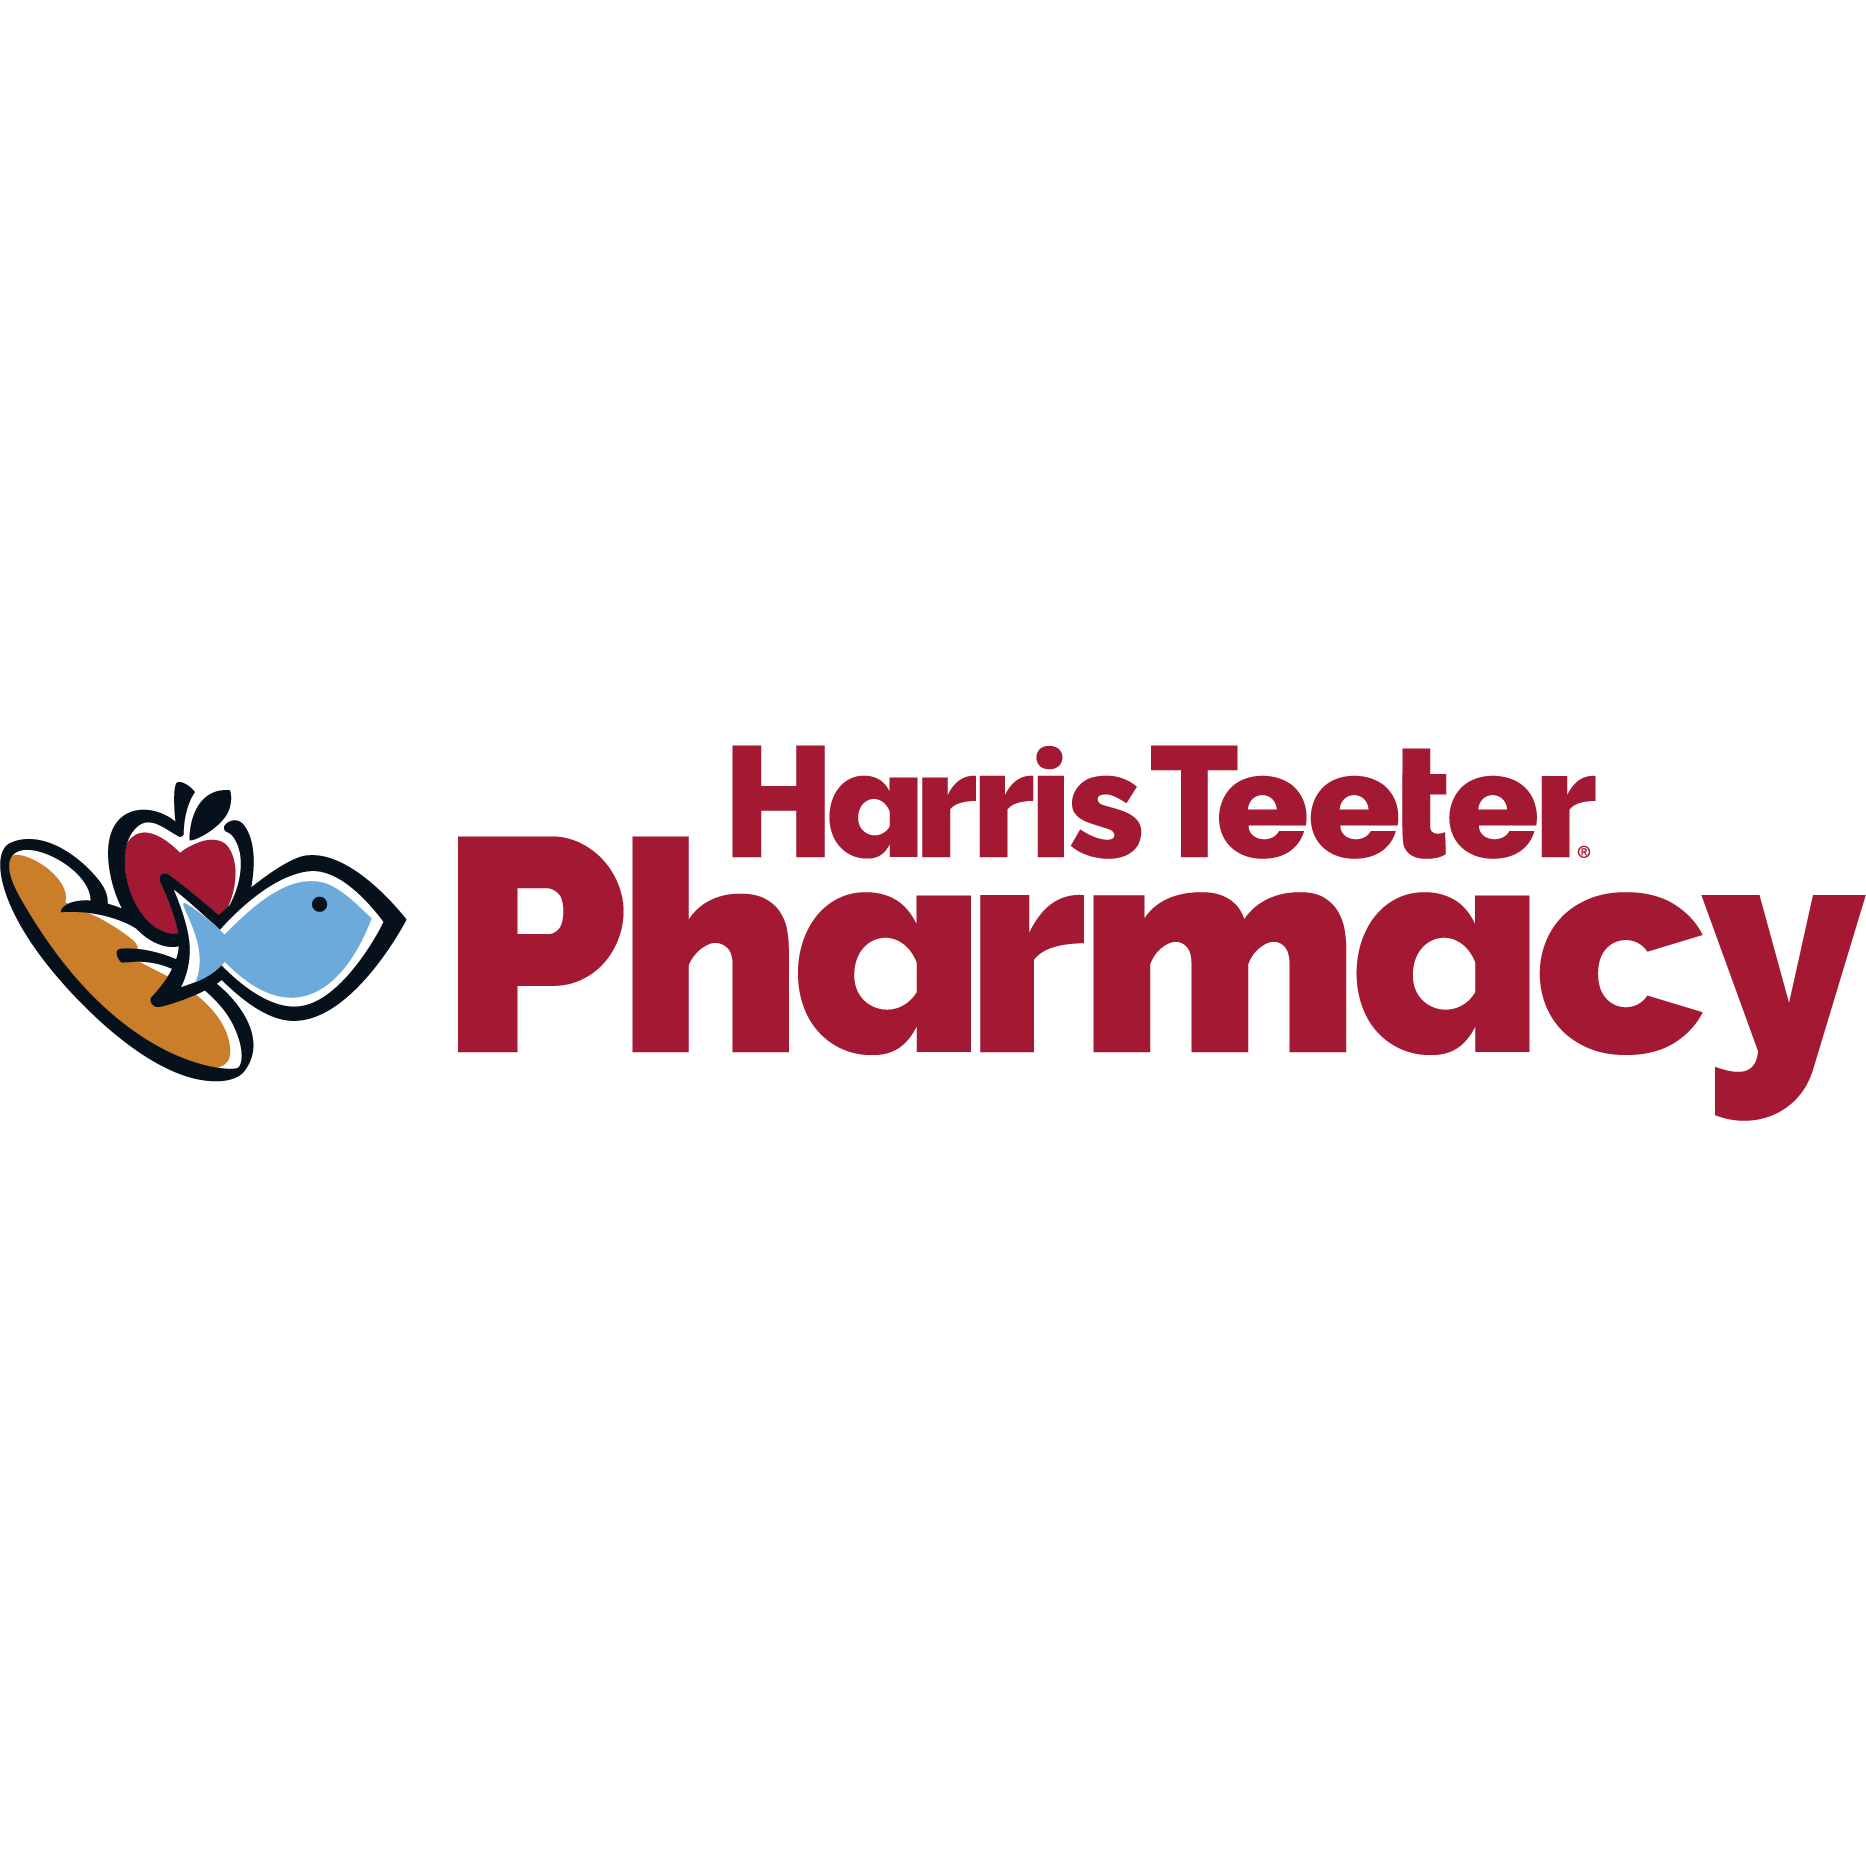 Harris Teeter Pharmacy in Williamsburg, VA 23185 (757) 9411684